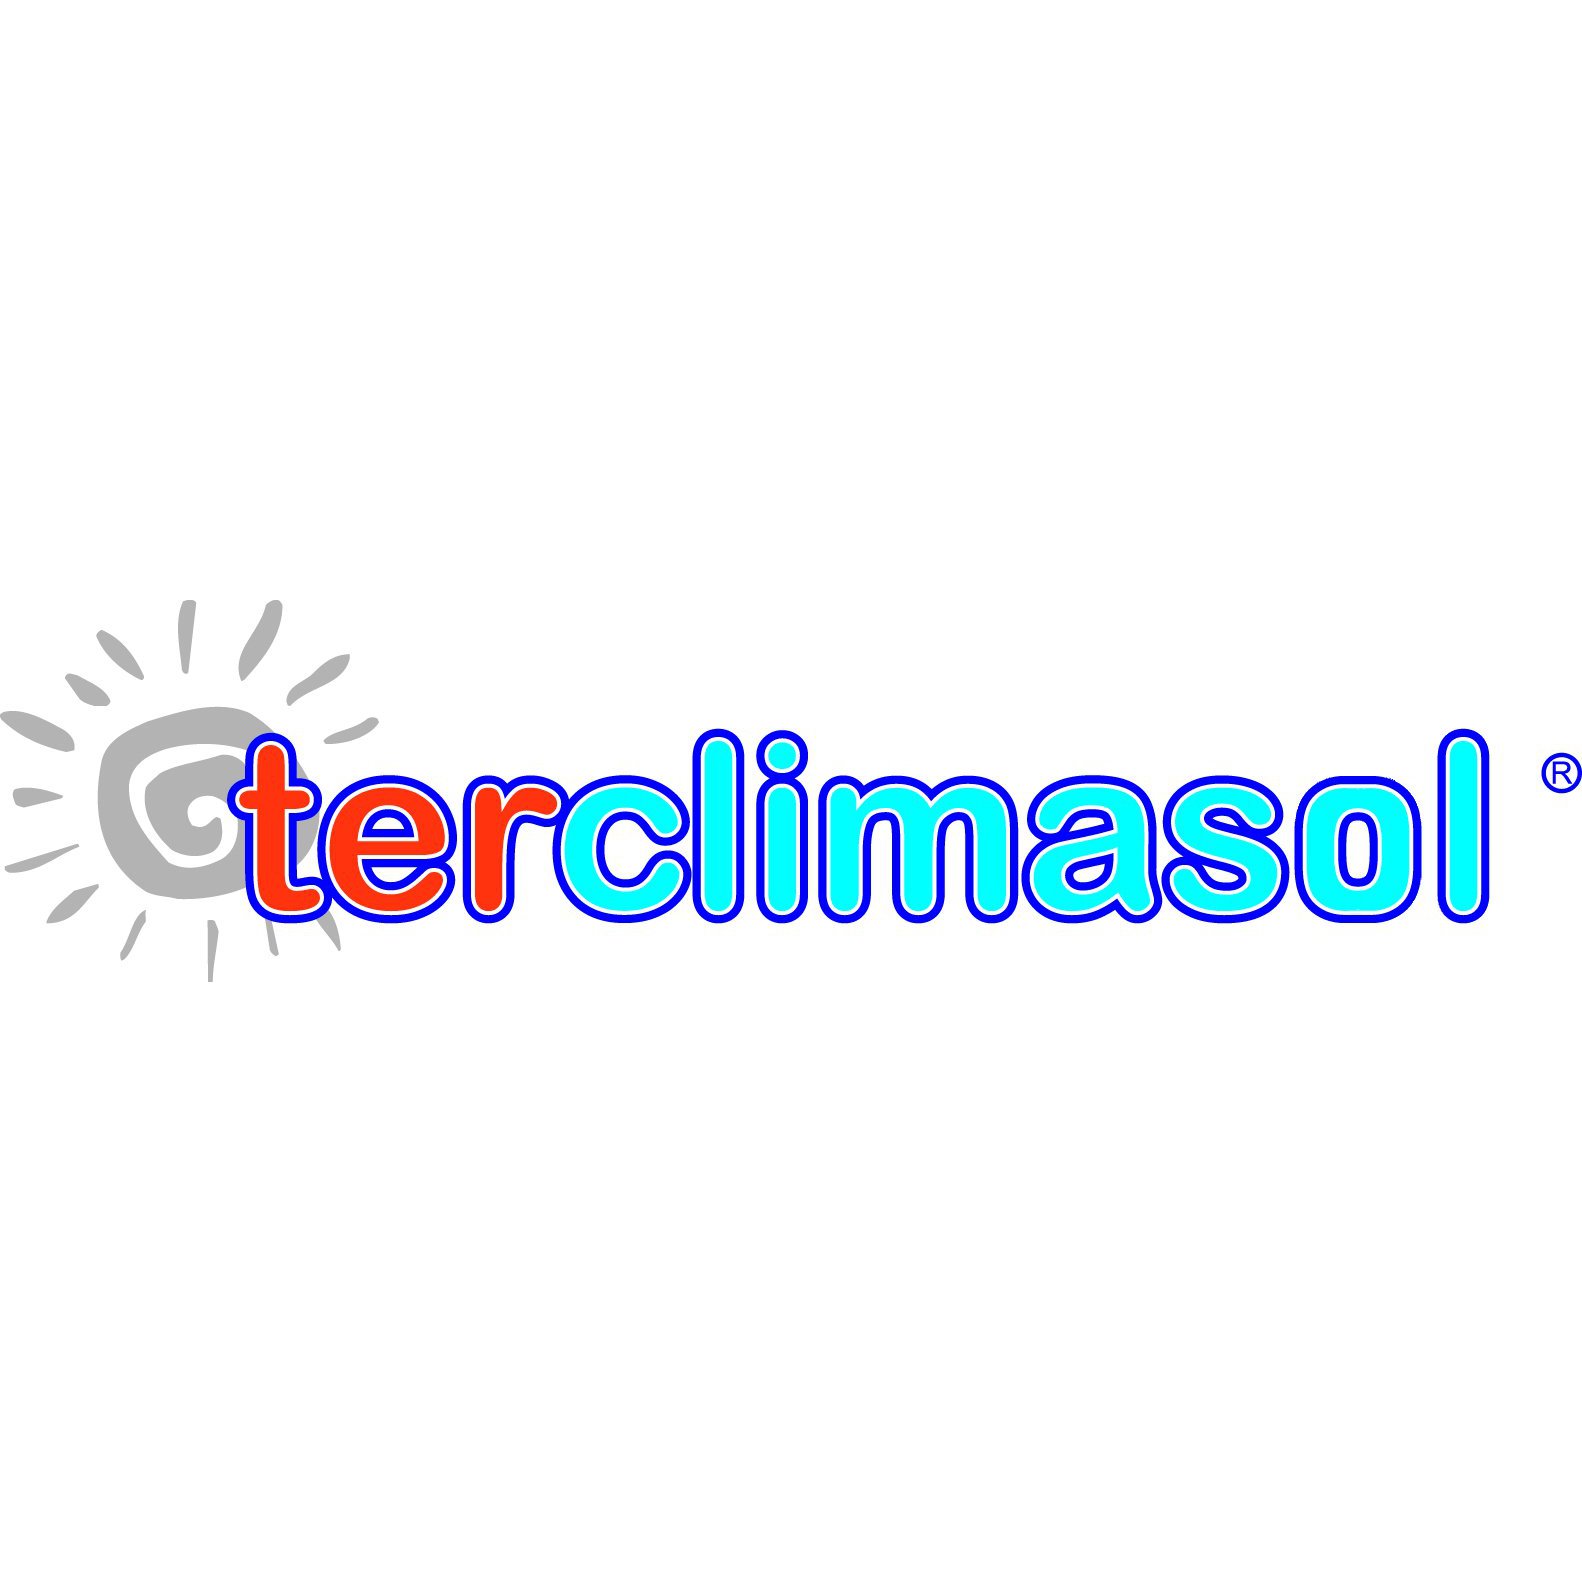 Terclimasol S.l. - Air Conditioning Contractor - Jerez de la Frontera - 956 34 24 98 Spain | ShowMeLocal.com